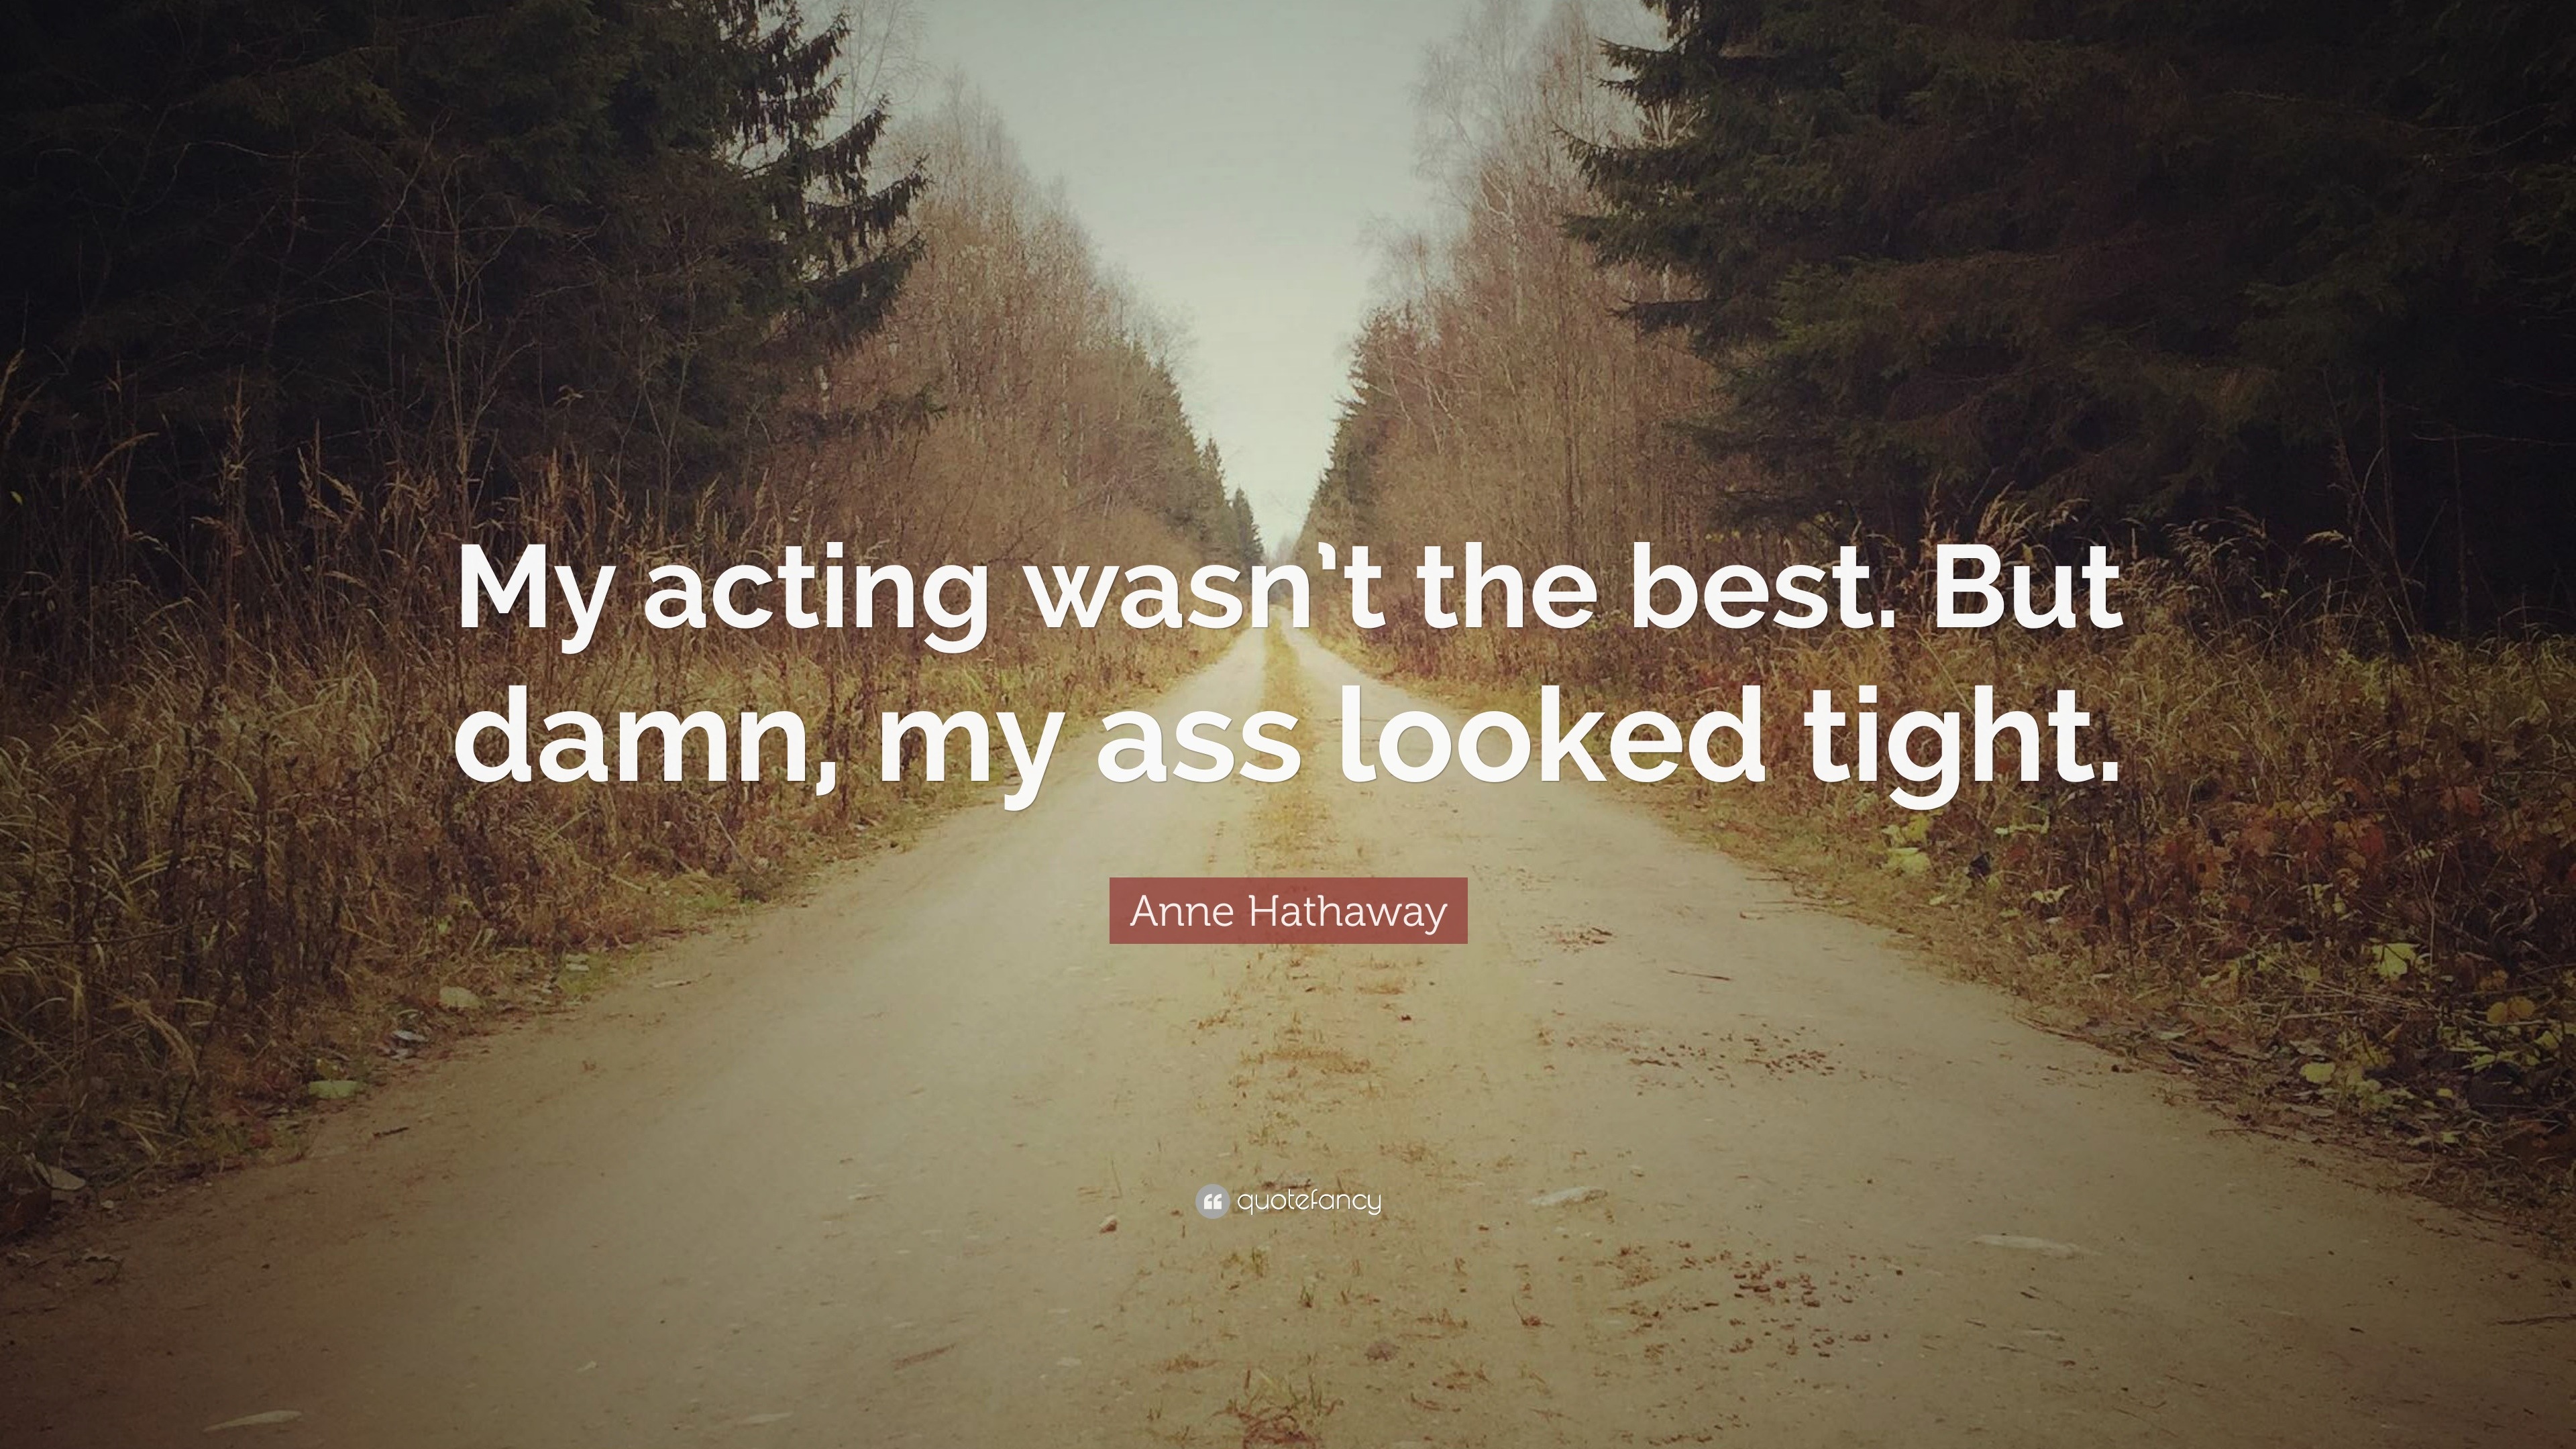 Anne Hathaway S Ass